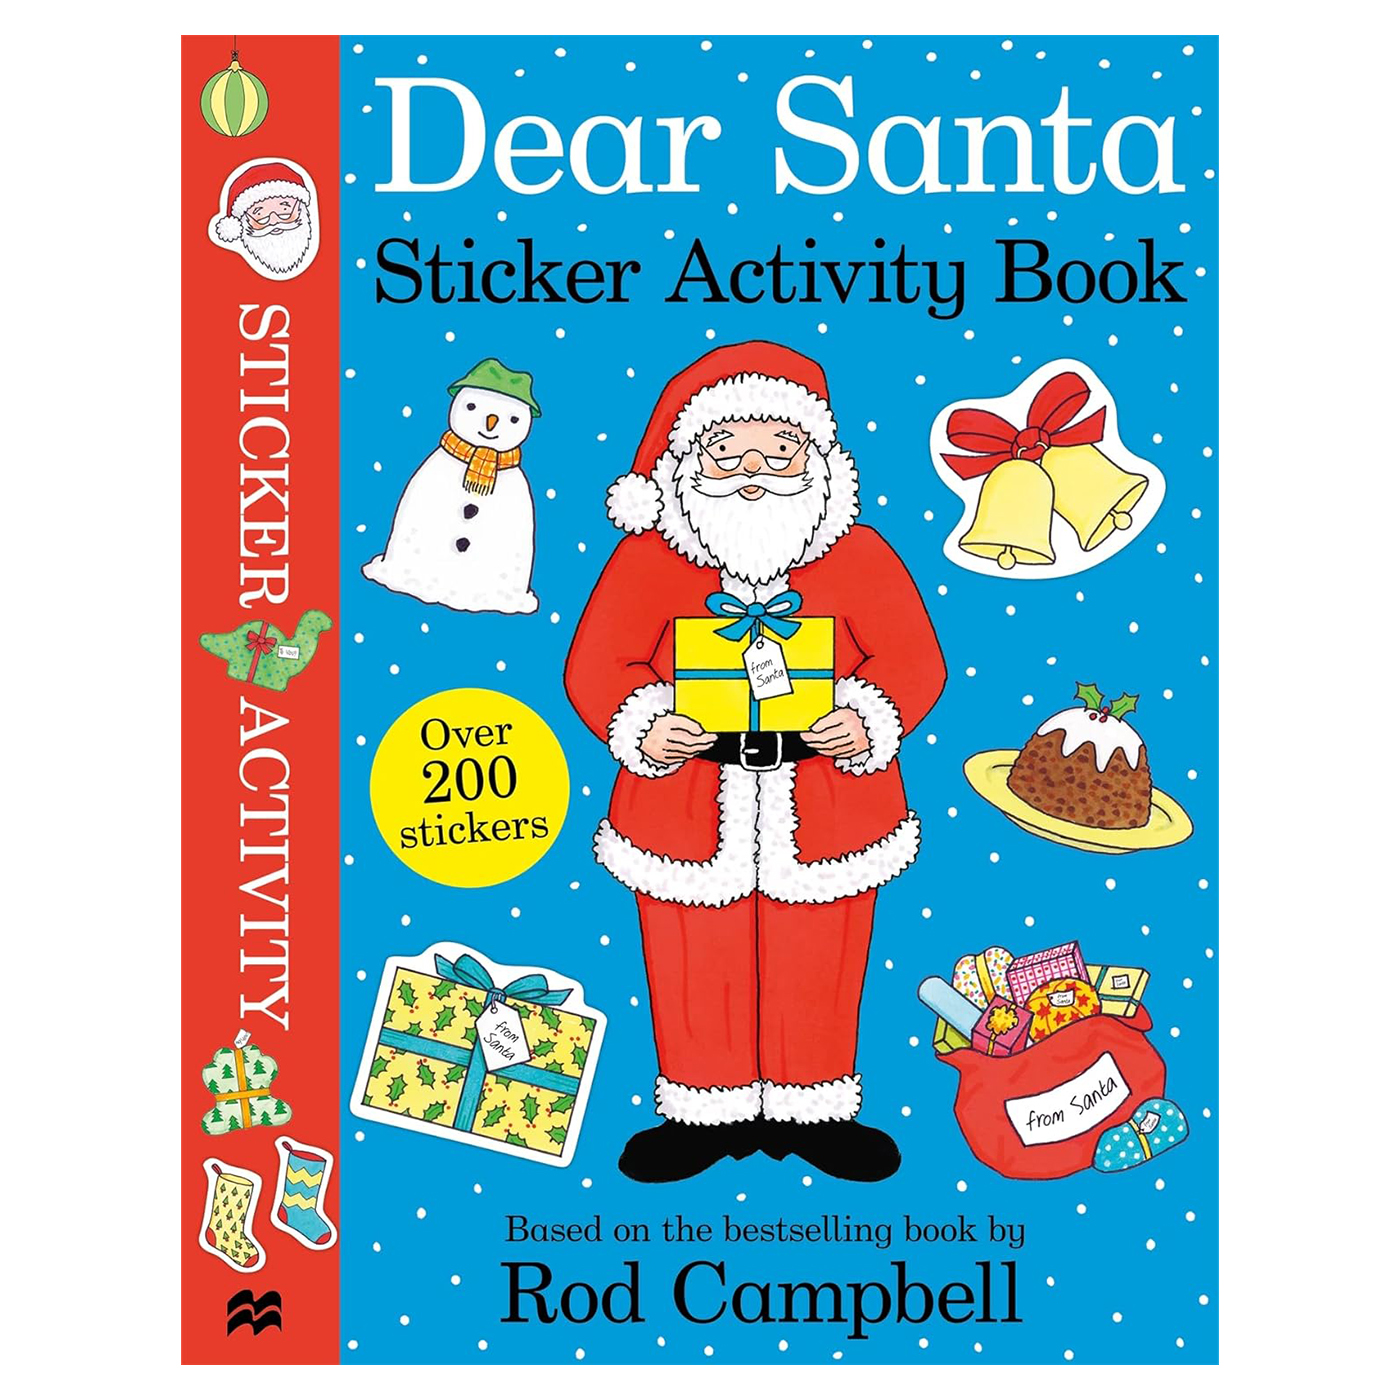 PAN MACMILLAN Dear Santa Sticker Activity Book